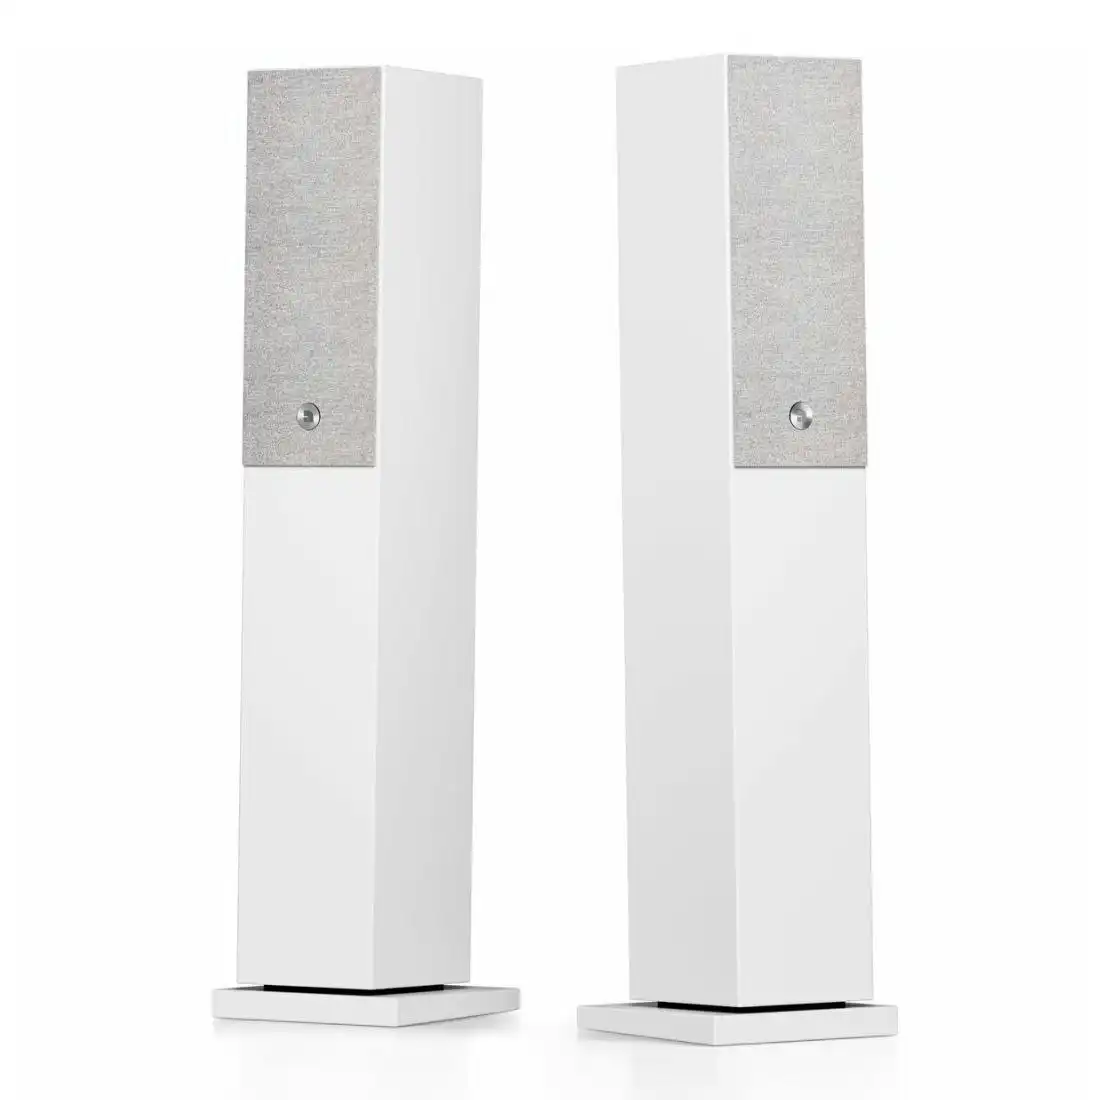 Audio Pro A36 WiFi Wireless Multiroom Floor Standing Tower Speakers - White